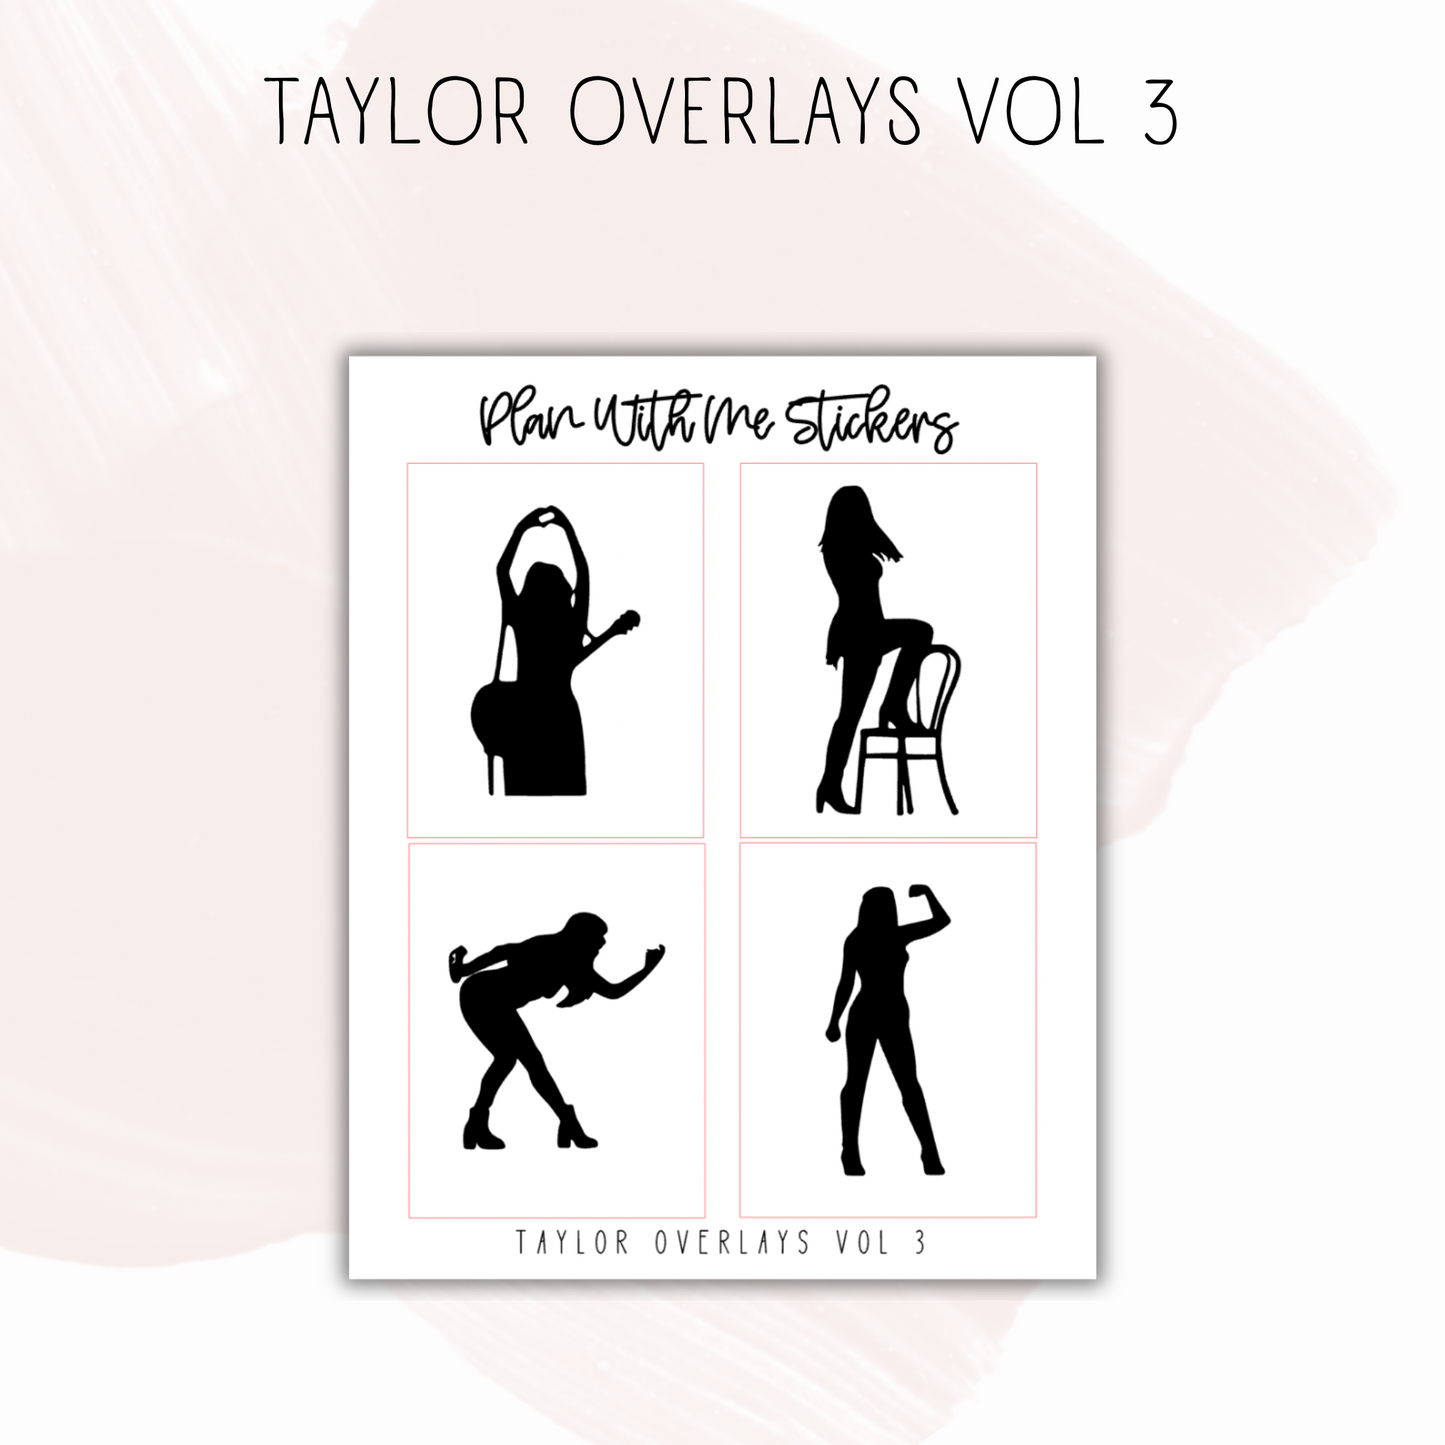 Taylor Overlays Vol 3